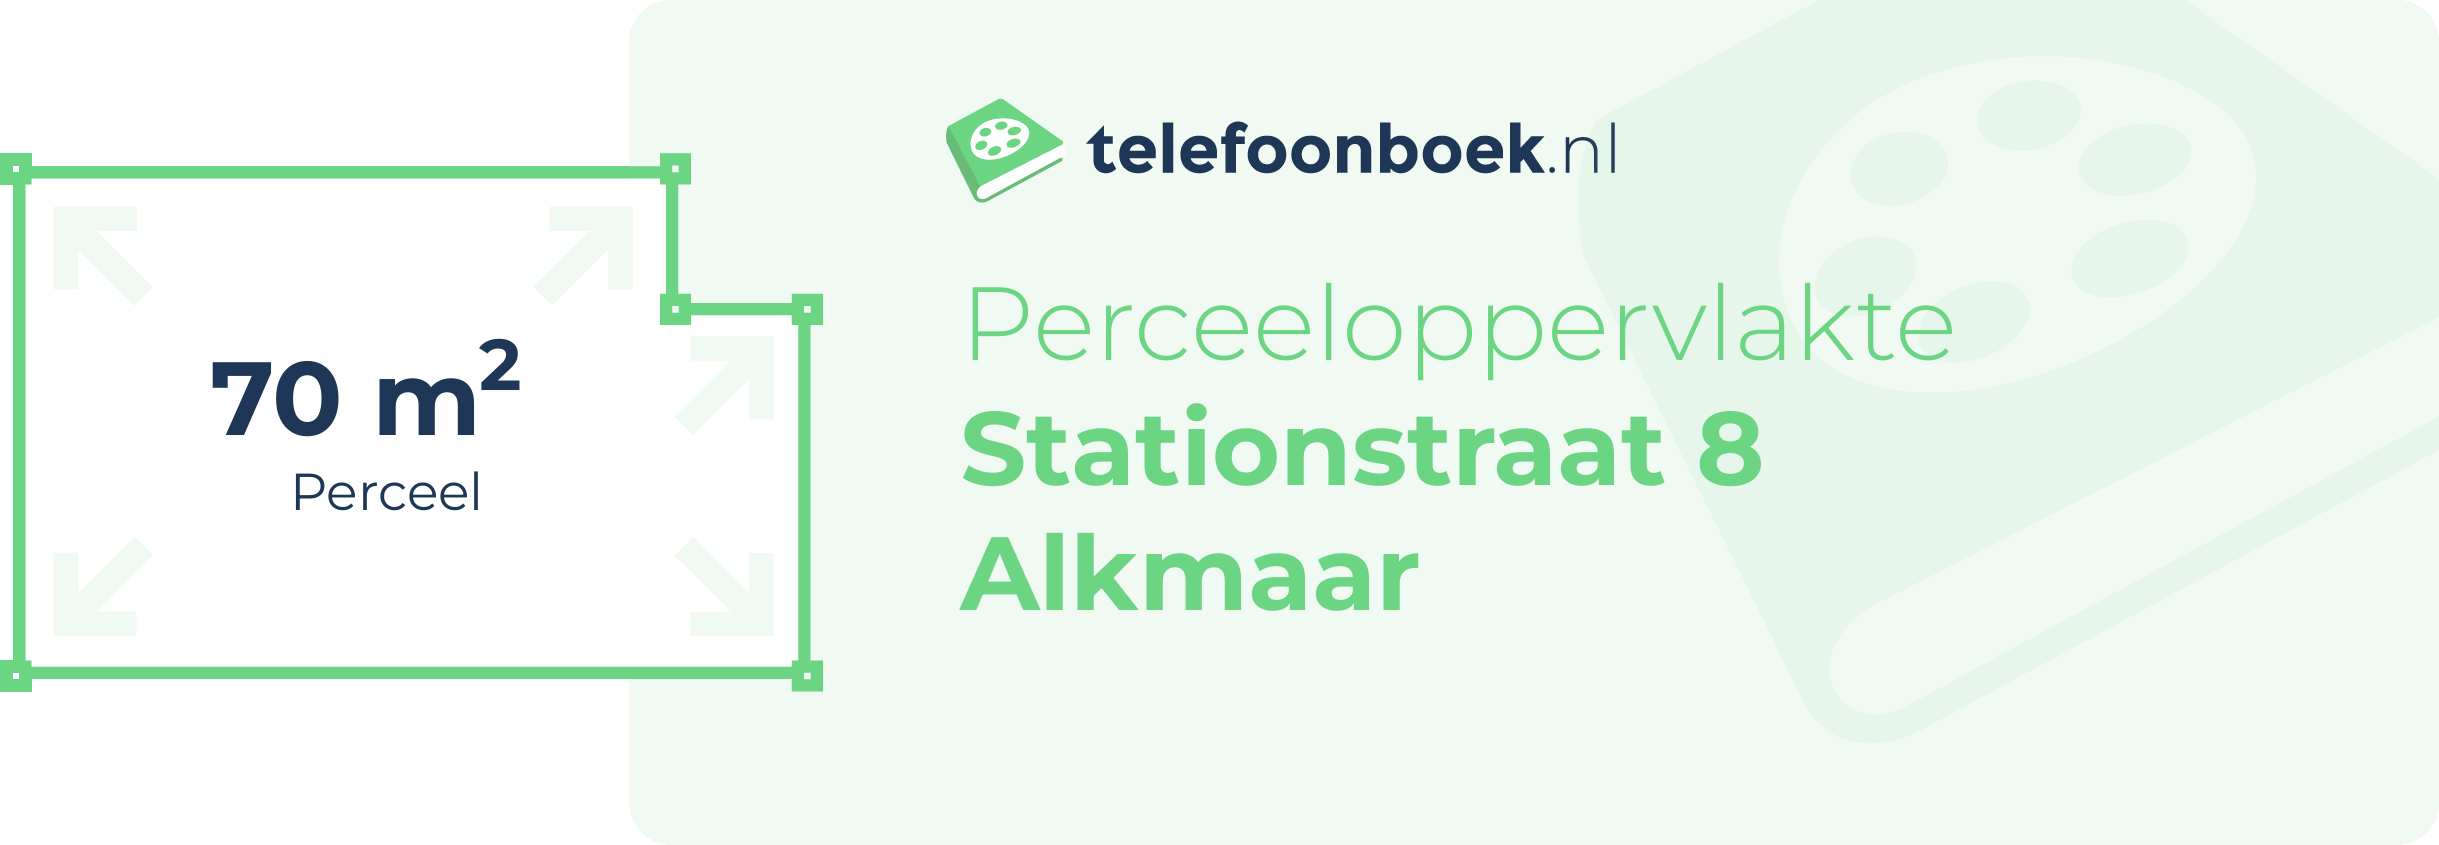 Perceeloppervlakte Stationstraat 8 Alkmaar